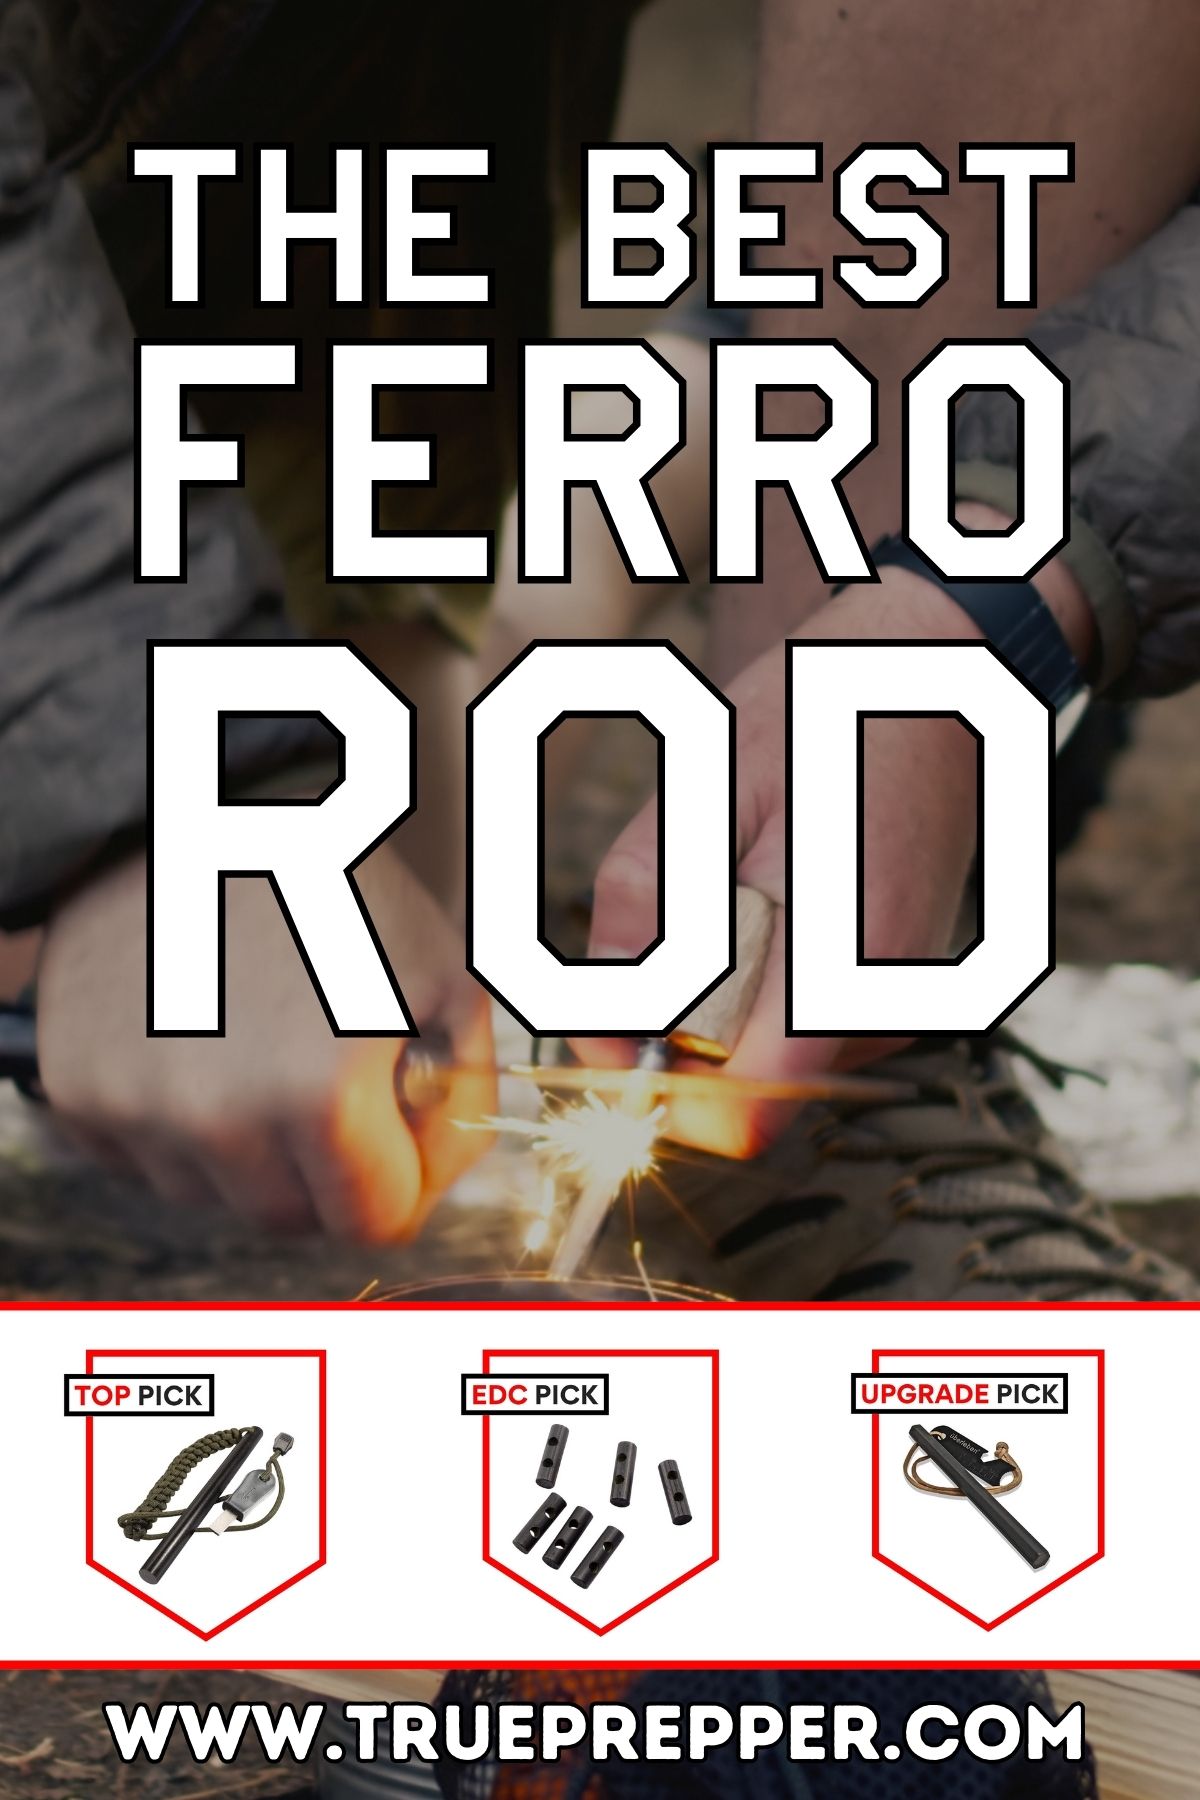 The Best Ferro Rod